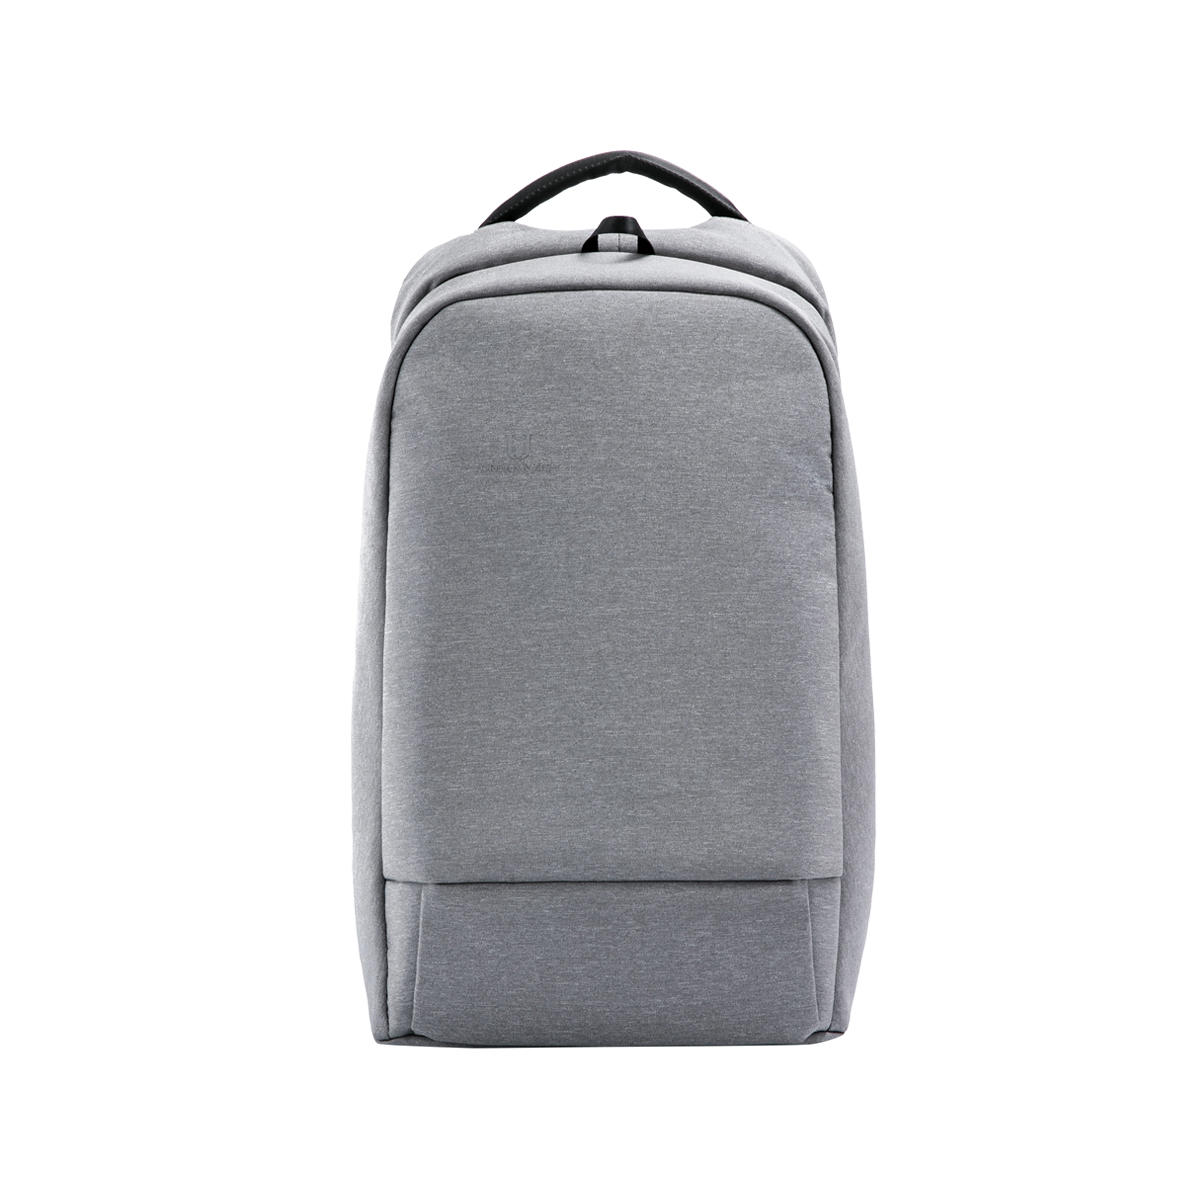 Jordan & judy 18L Anti-theft Backpack Zaino Zaino Impermeabile 15.6 pollici Laptop Borsa Viaggi all'aperto